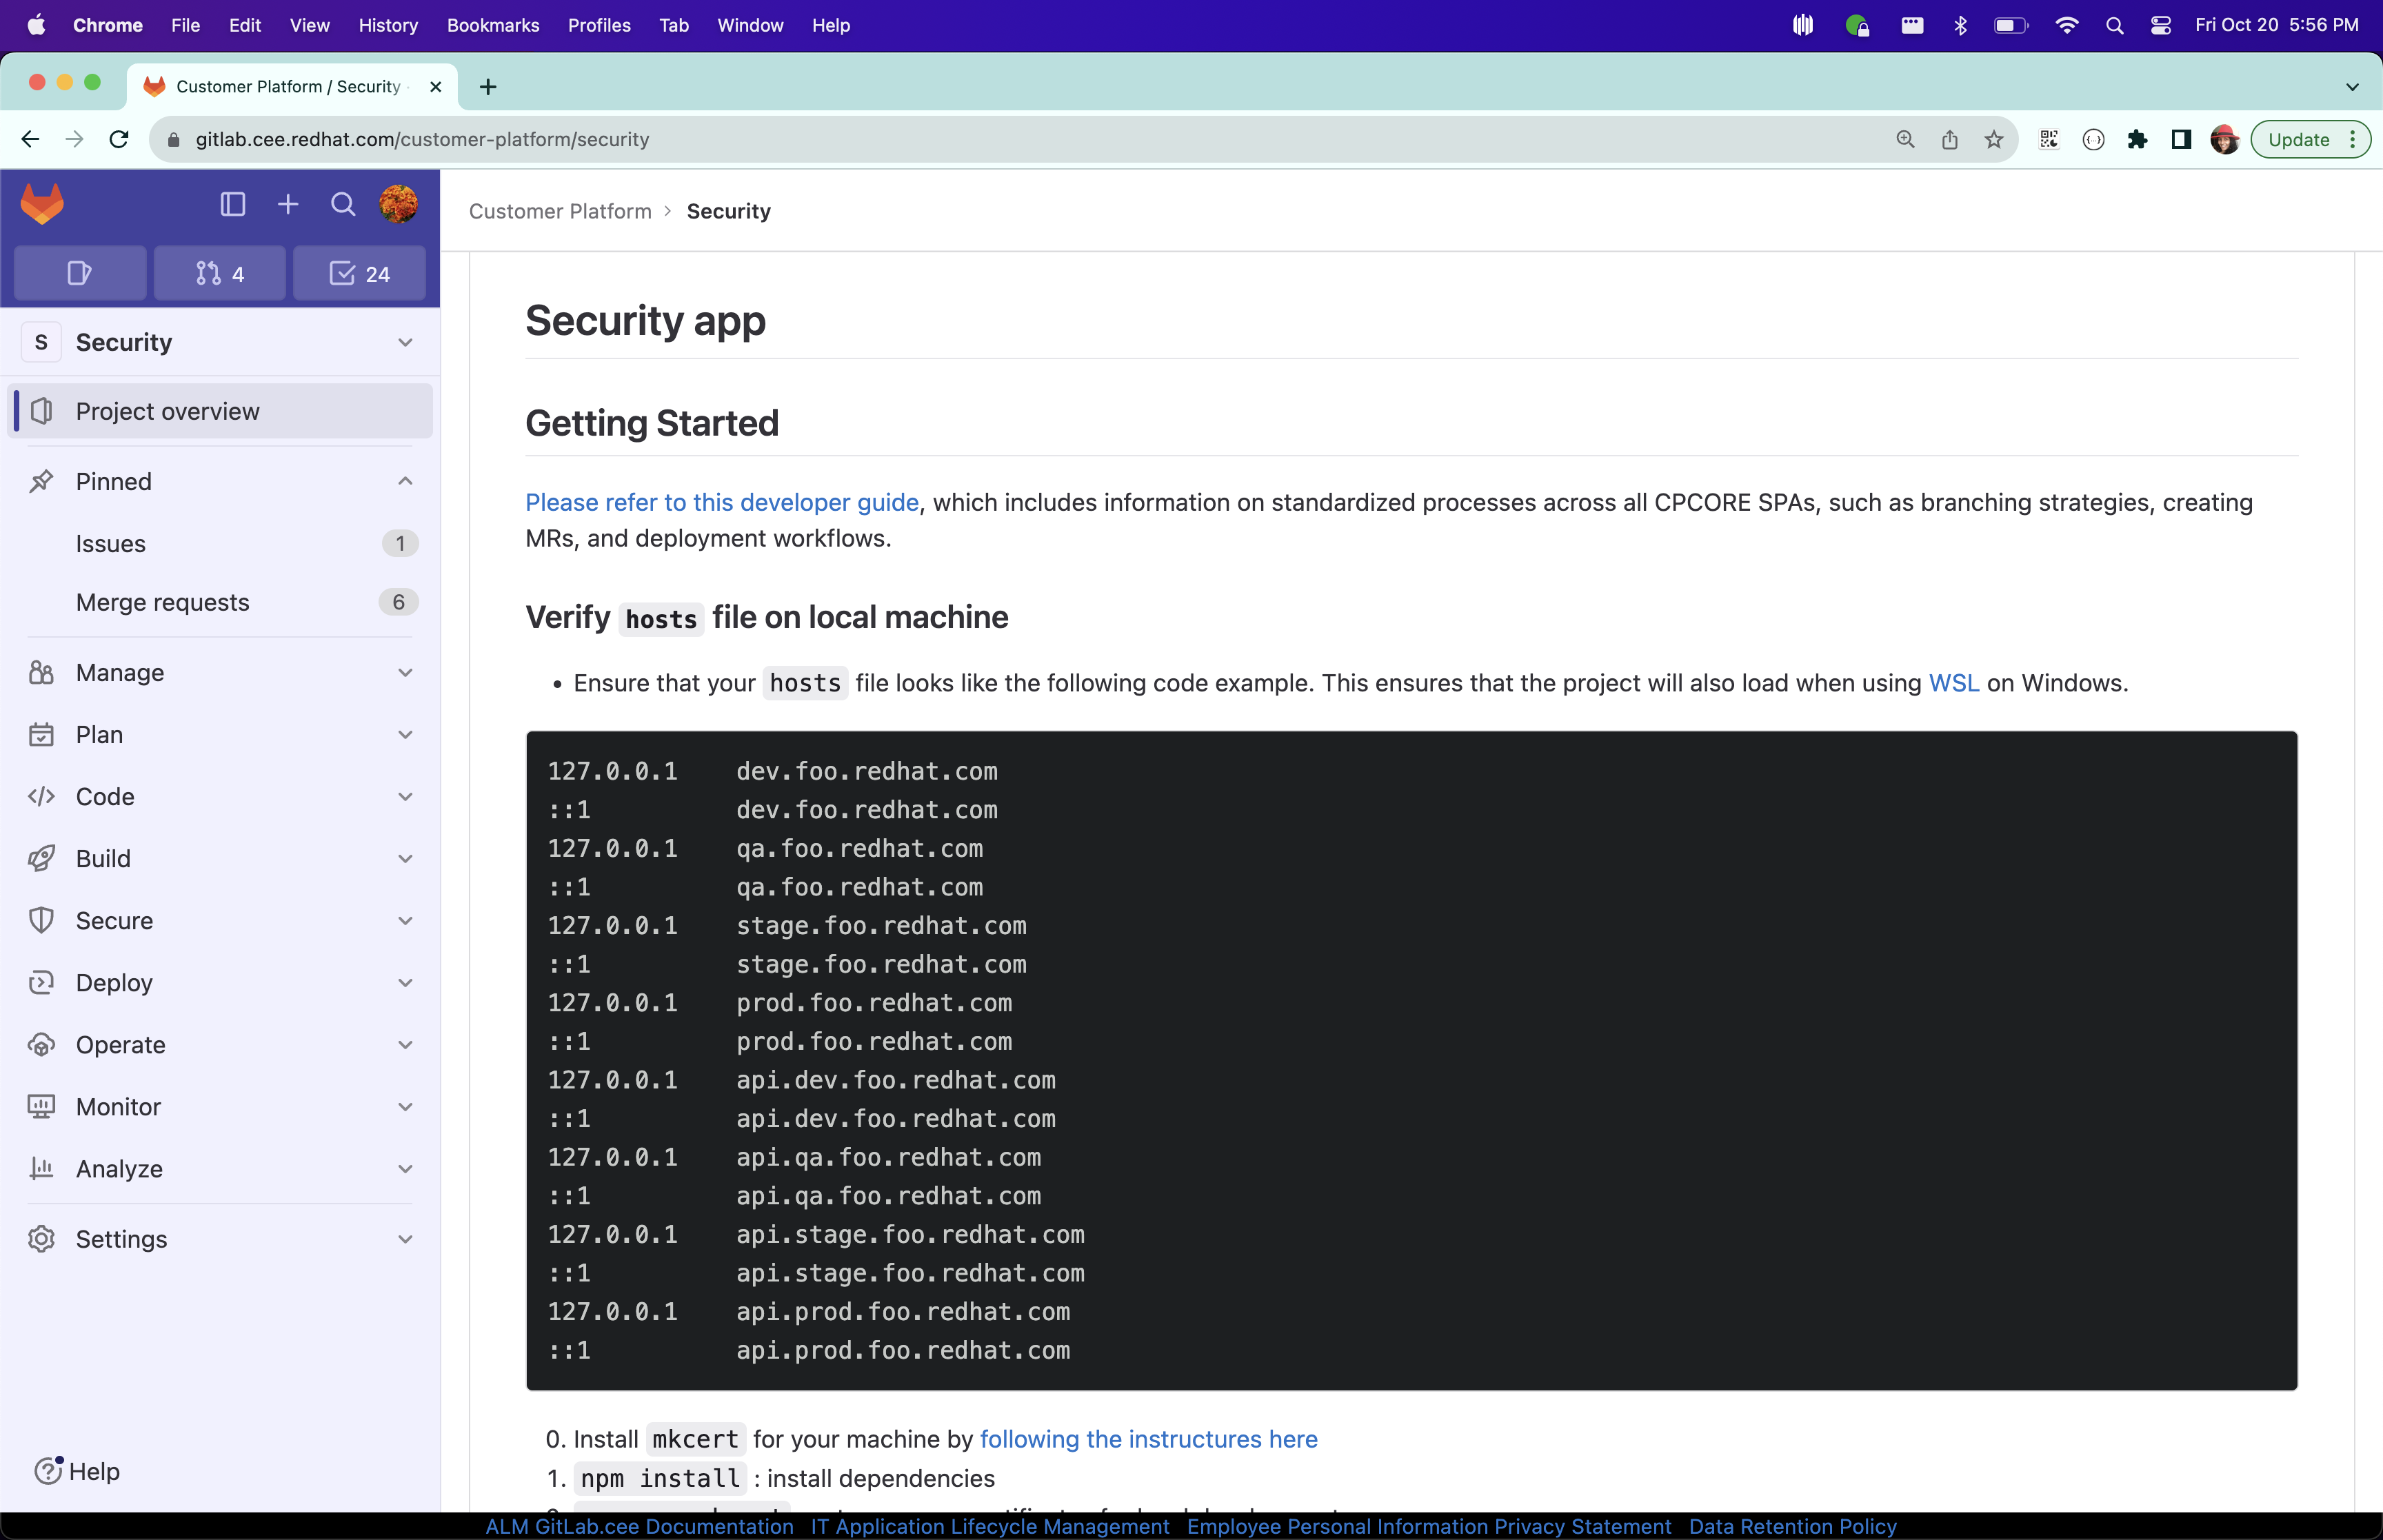 Gitlab /security README